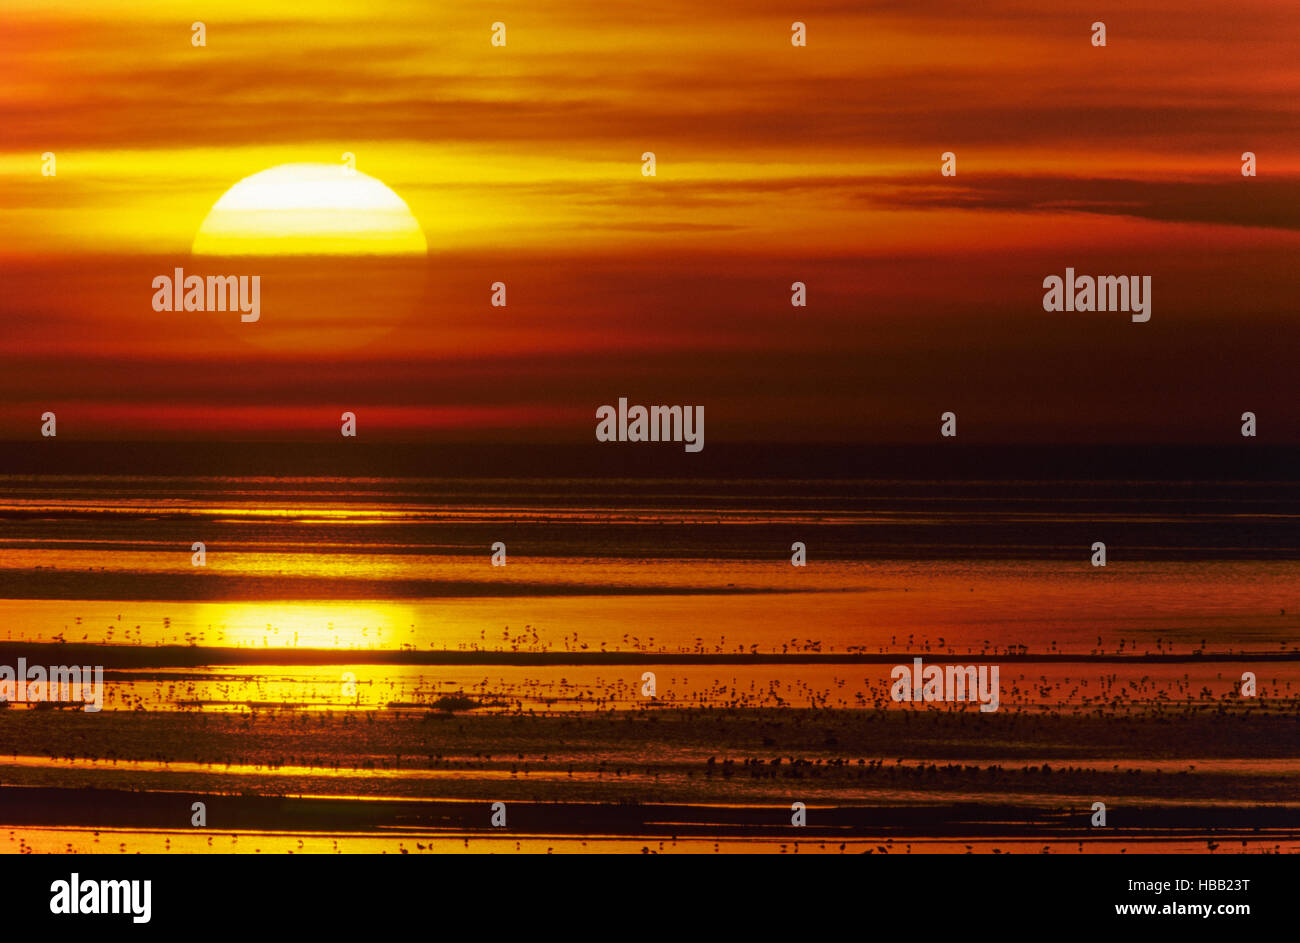 Sunset with shorebirds at North Sea coast Stock Photo